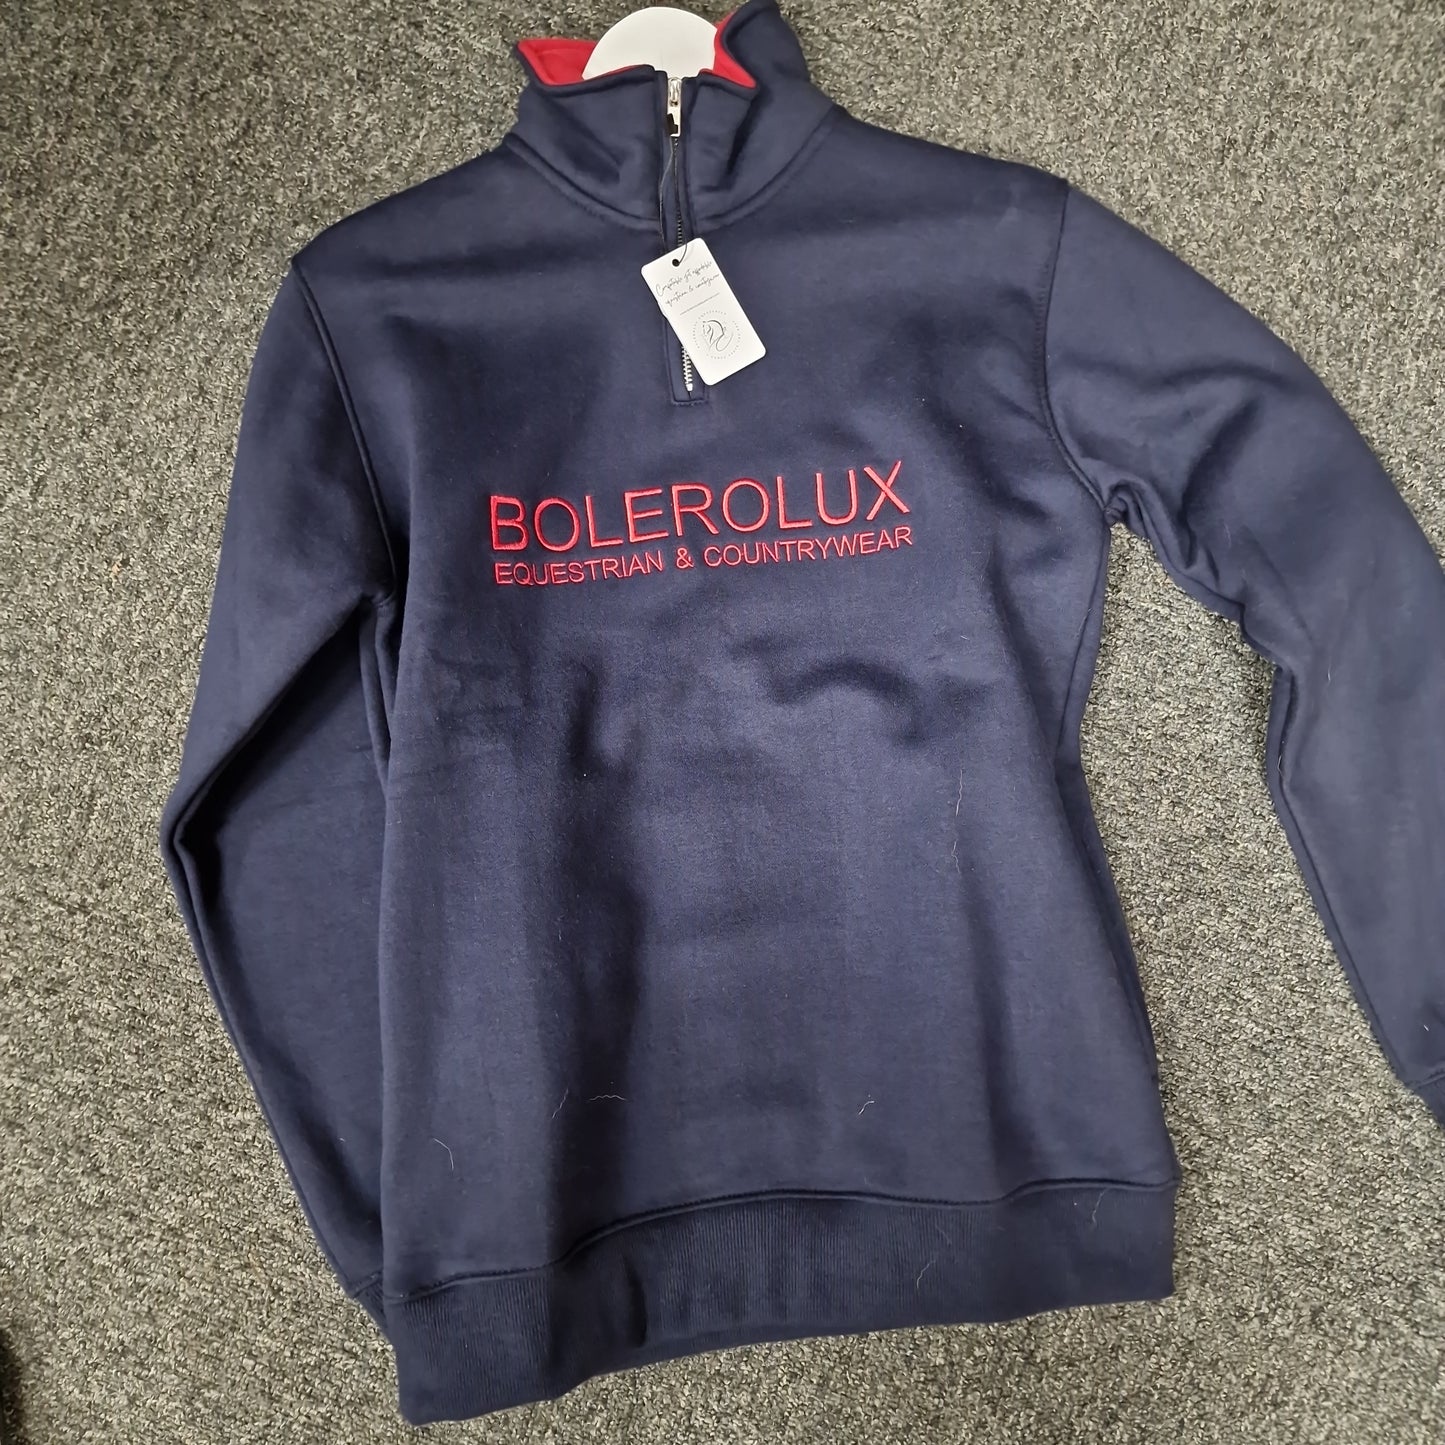 Bolerolux Unisex 1/4 zip top / jumper / pullover / farming / young farmer / Equestrian